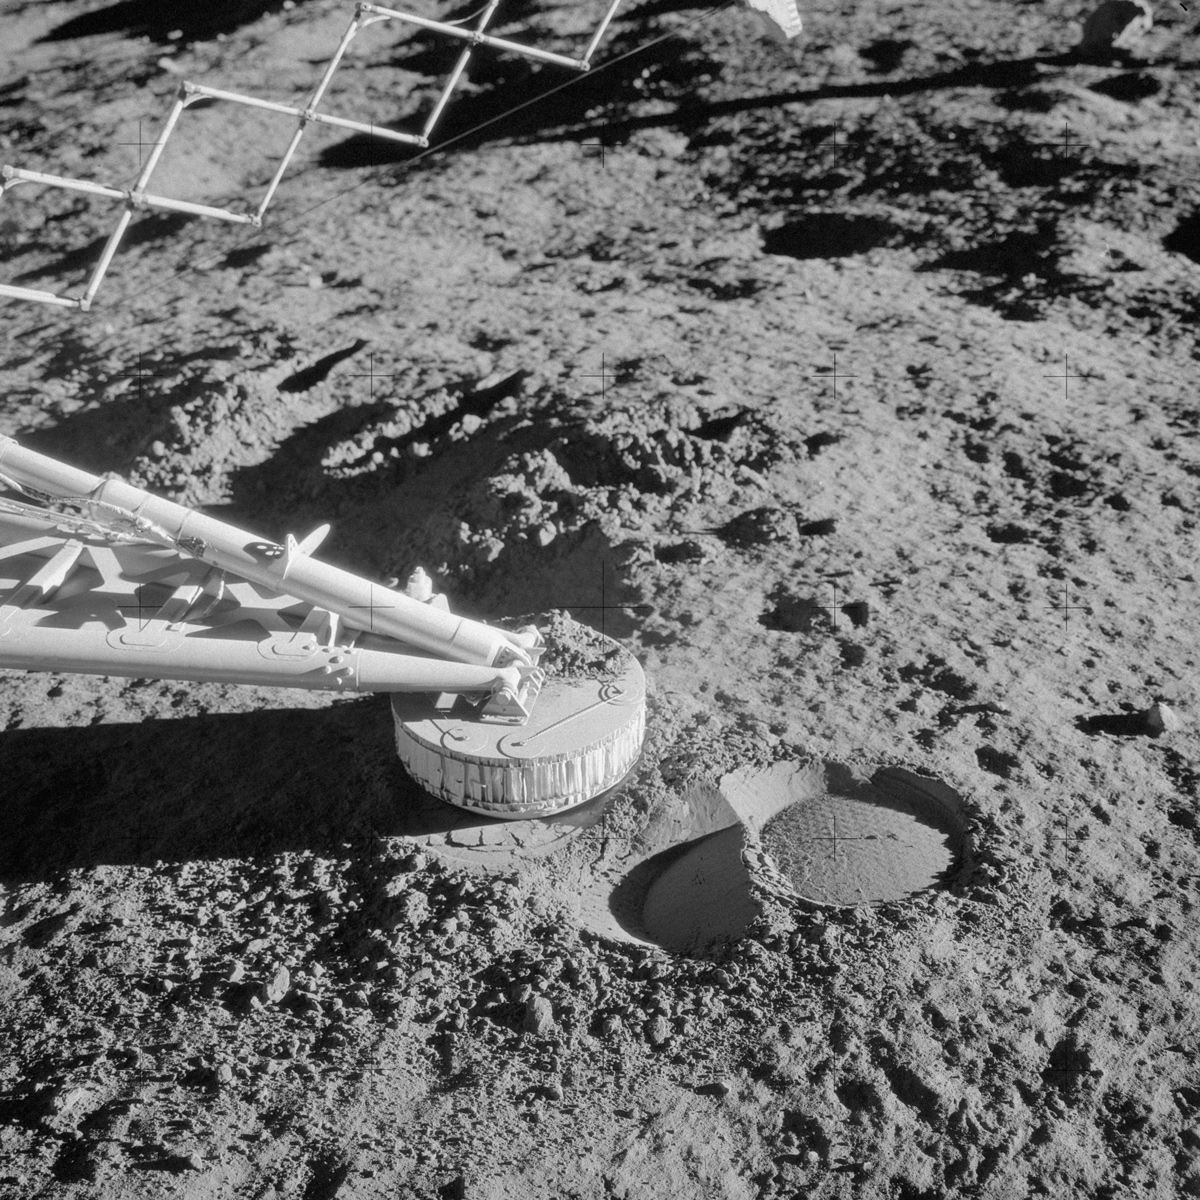 Close-up of the footpad of Surveyor 3 on lunar surface